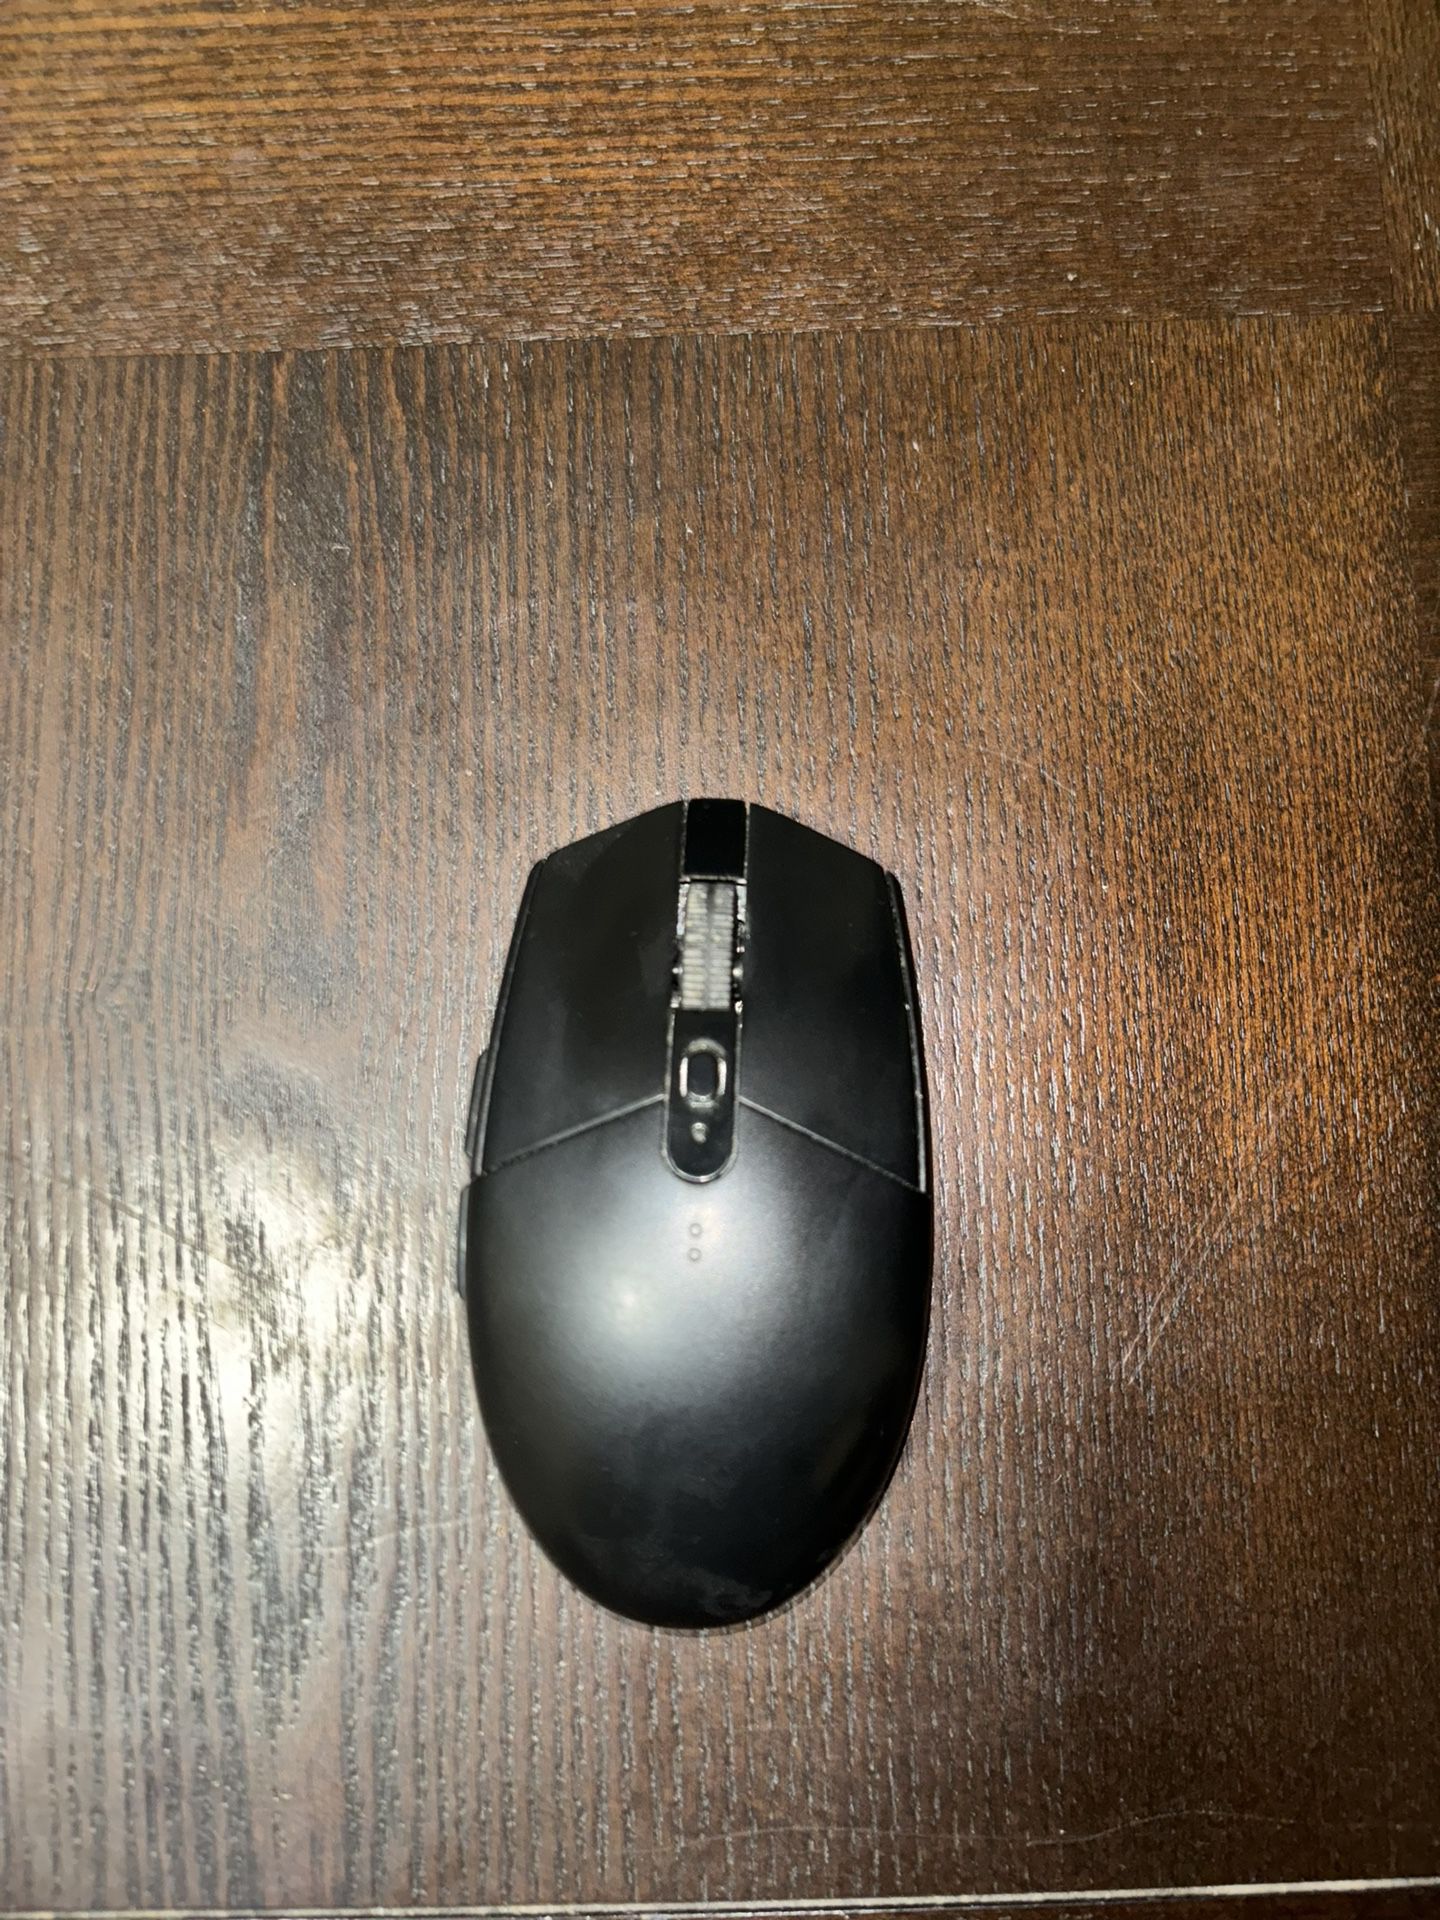 Logitech G305 Lightspeed Wireless Gaming Mouse